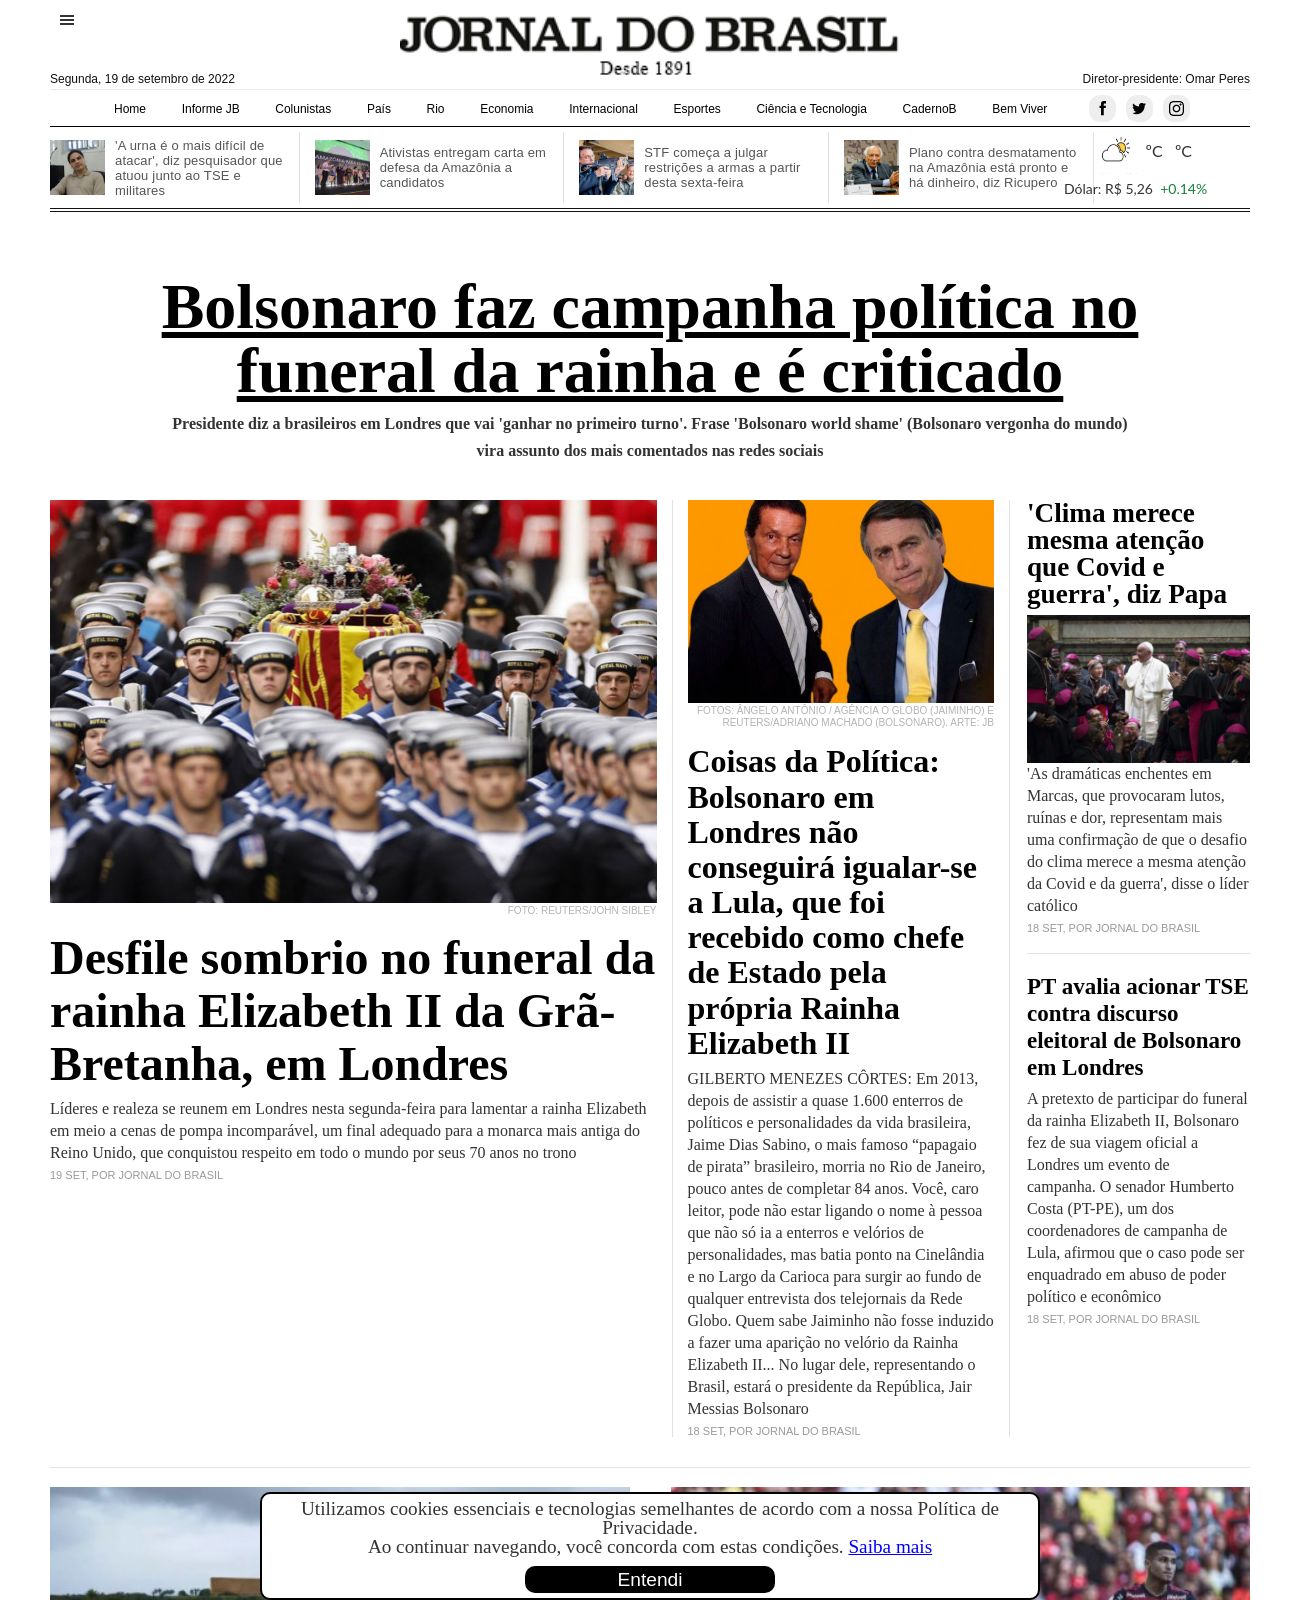 Jornal do Brasil at 2022-09-19 08:58:11-03:00 local time